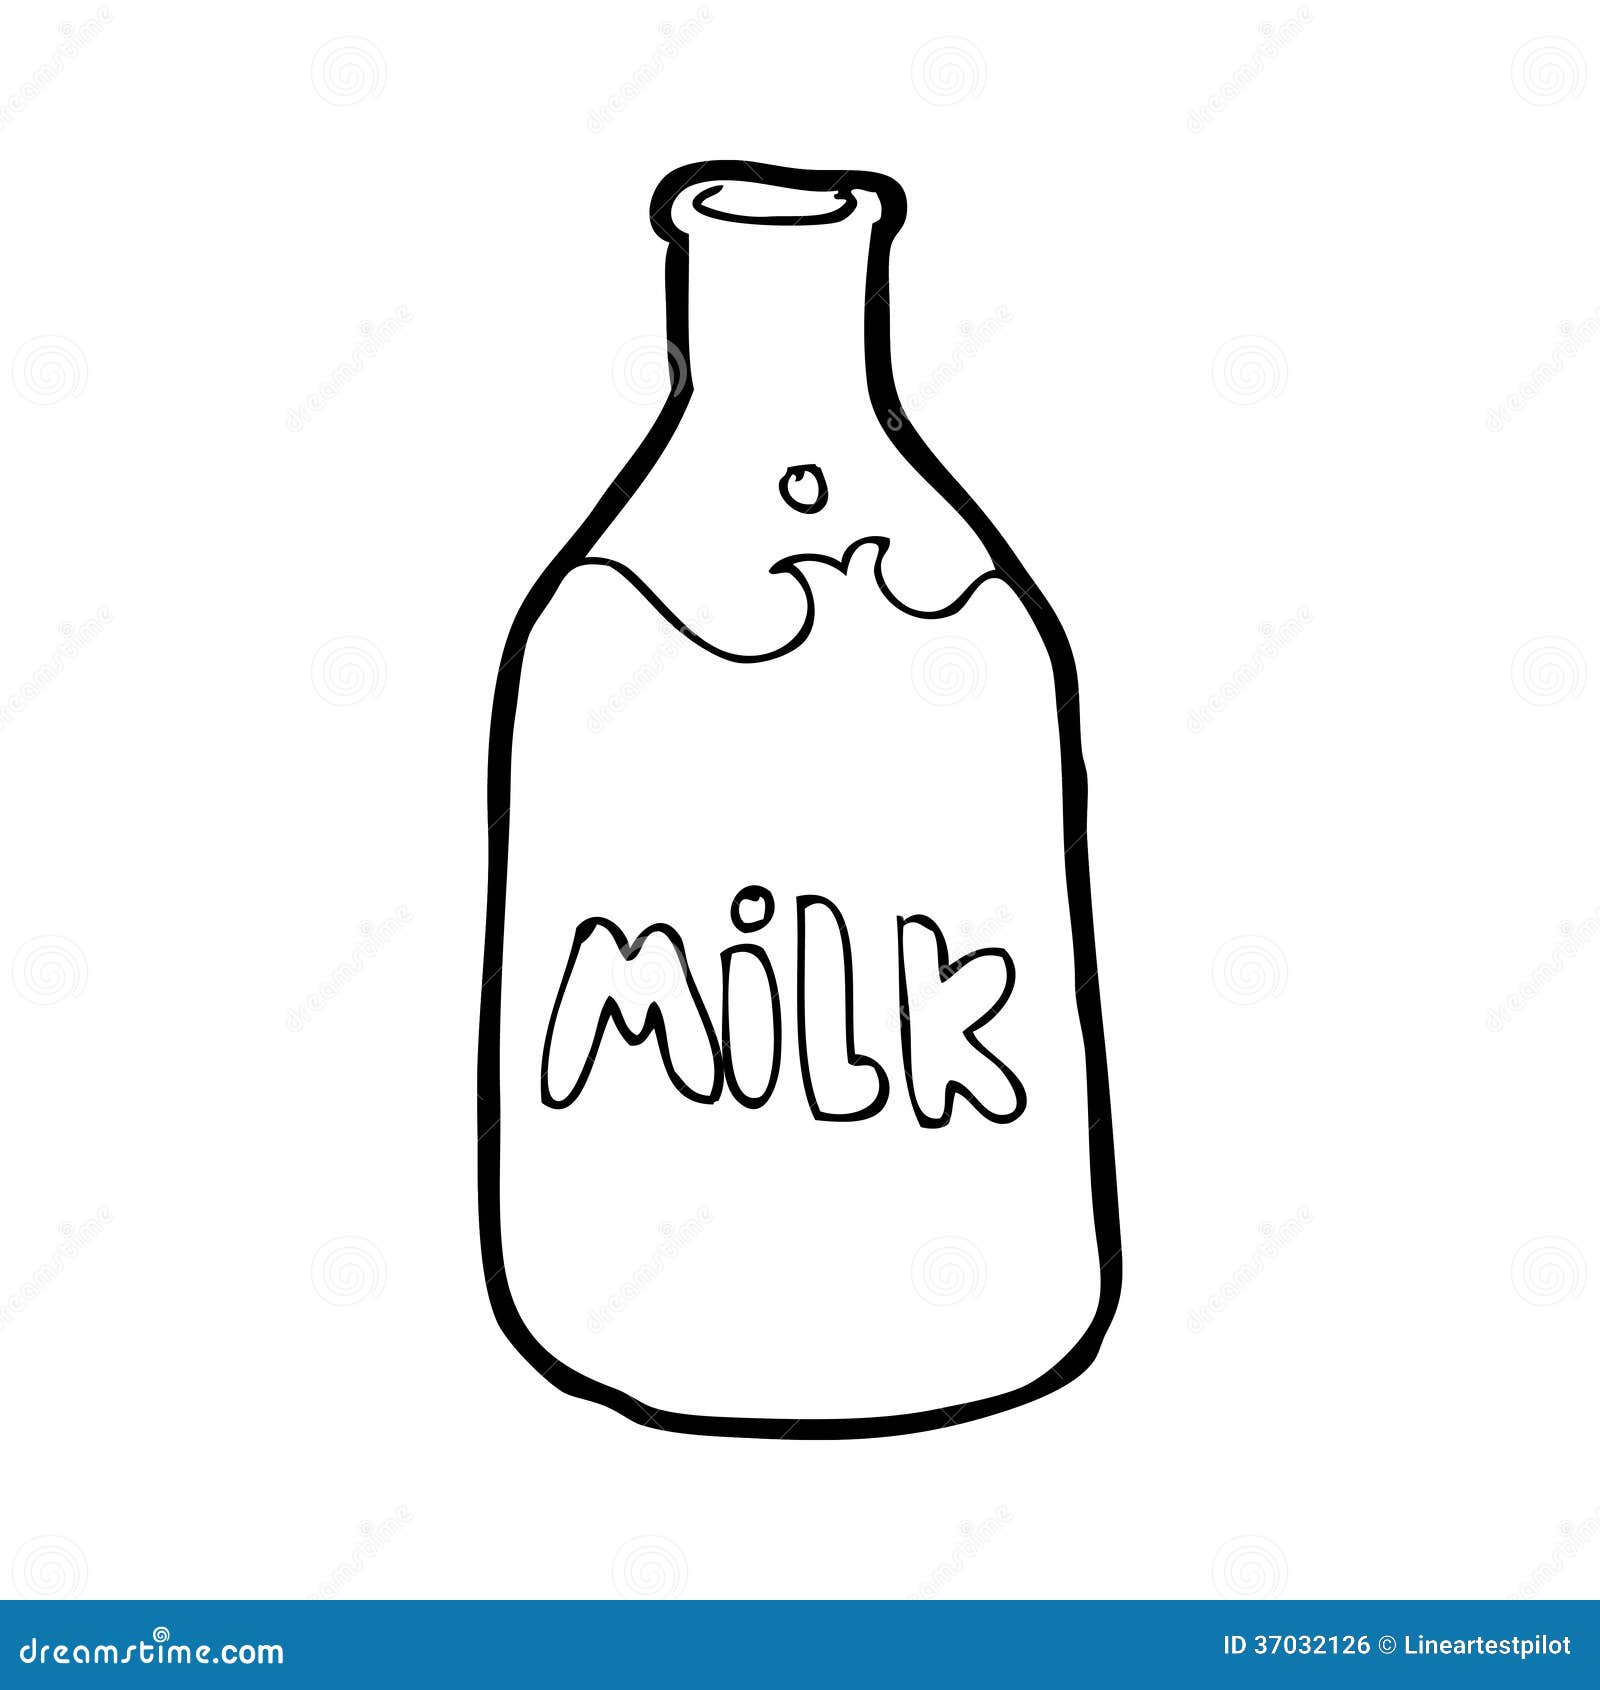 Cartoon Bottle Of Milk Royalty Free Stock Image - Image: 37032126